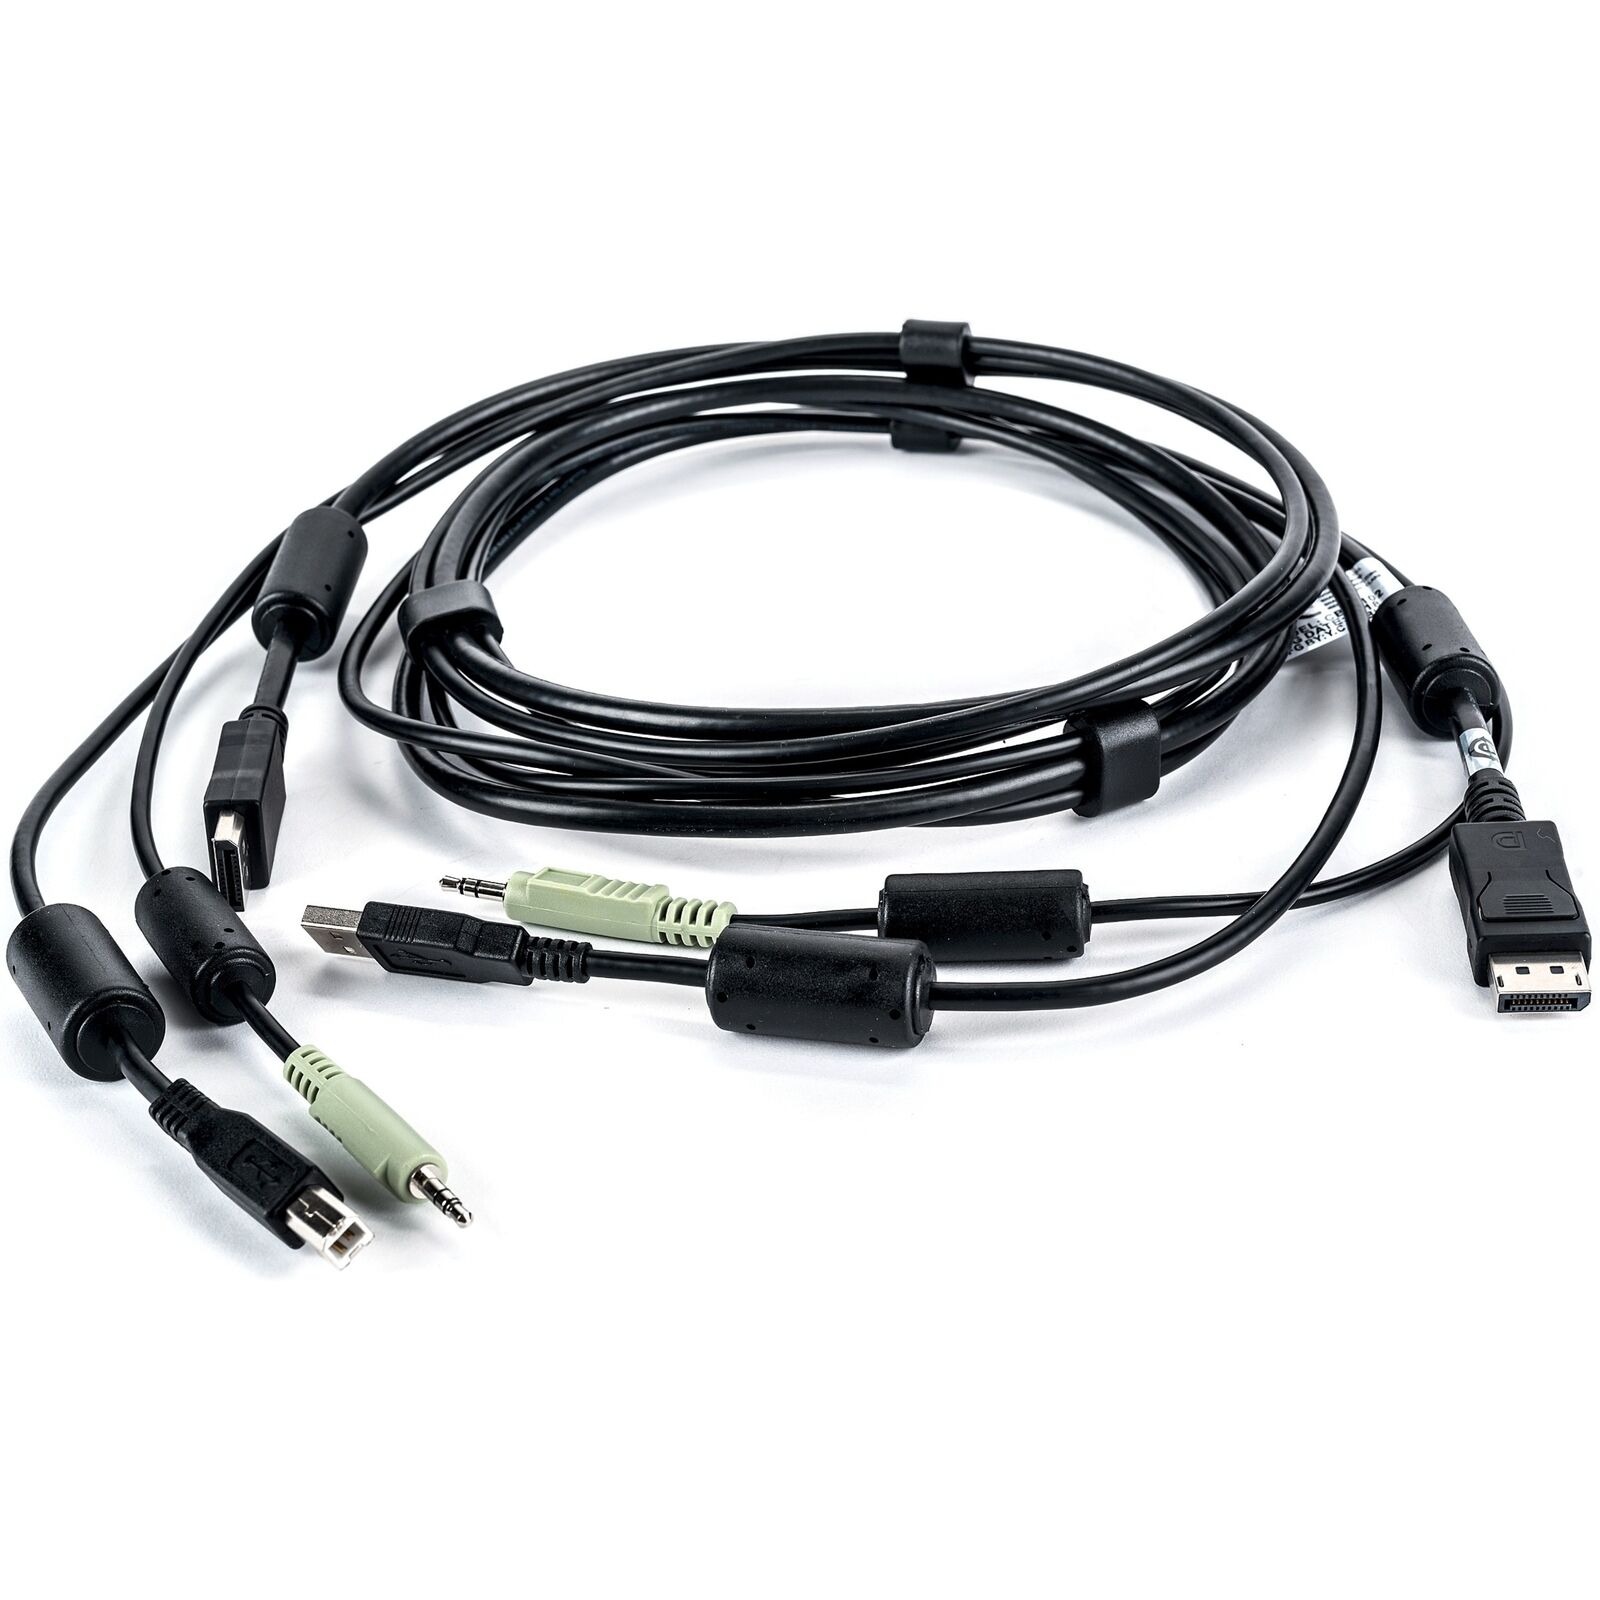 Vertiv Cbl0102 A/v Cable